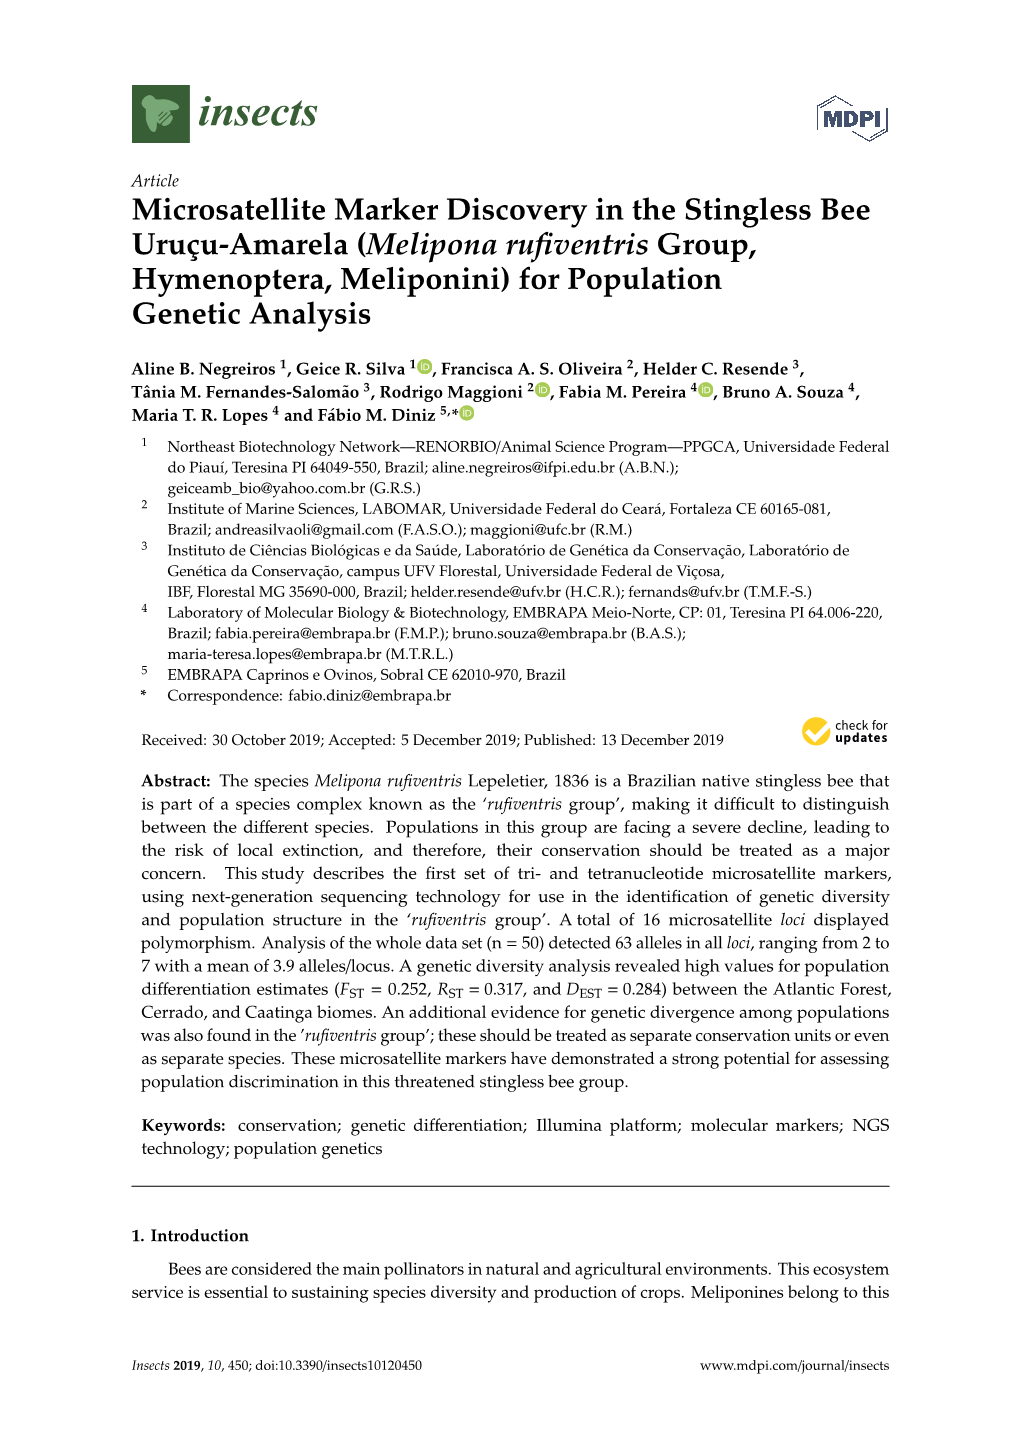 Microsatellite Marker Discovery in the Stingless Bee Uruçu-Amarela (Melipona Ruﬁventris Group, Hymenoptera, Meliponini) for Population Genetic Analysis